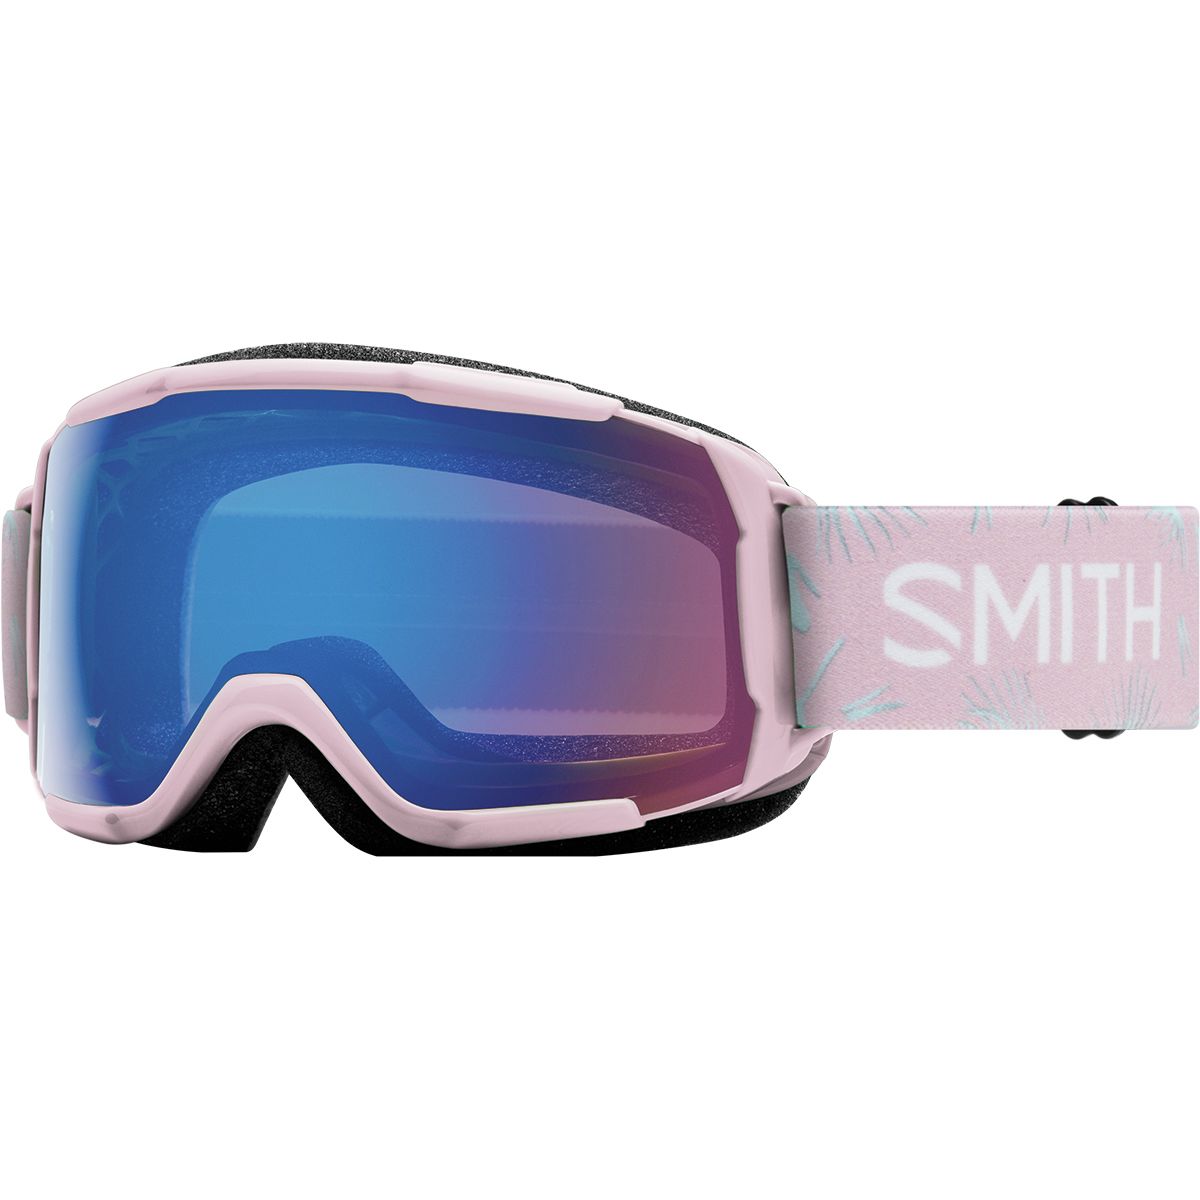 Smith Grom ChromaPop Goggles - Kids' Pink Paradise/Chroma Rose